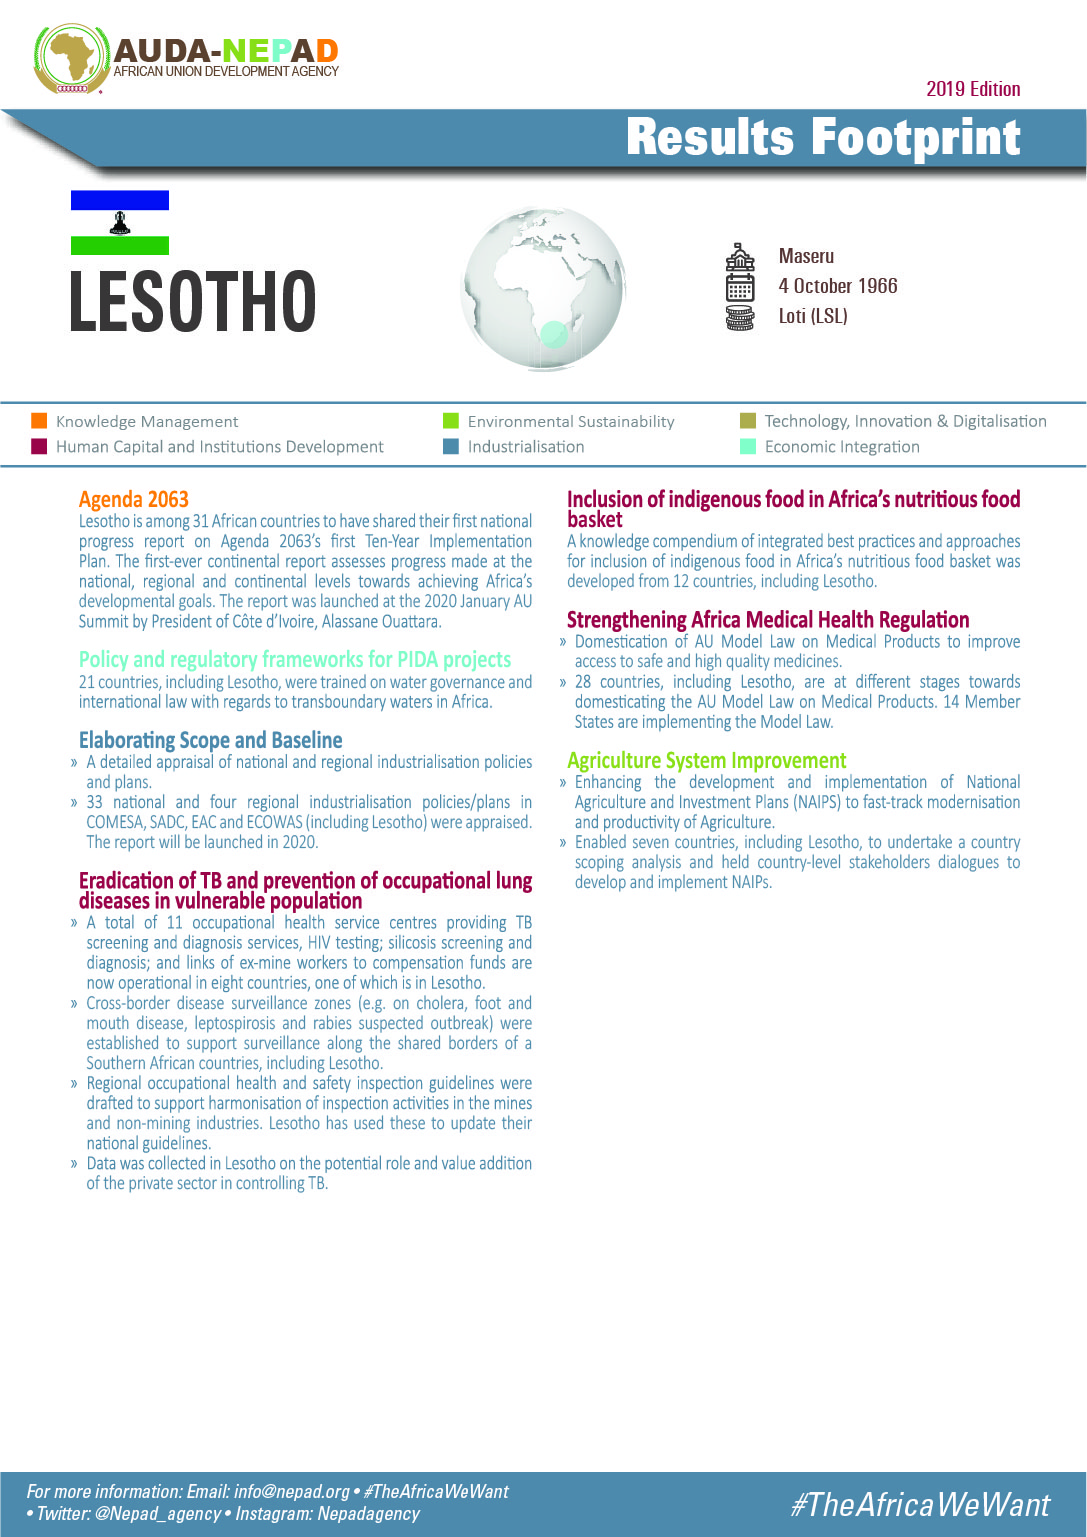 2019 AUDA-NEPAD Footprint: Country Profiles: Lesotho